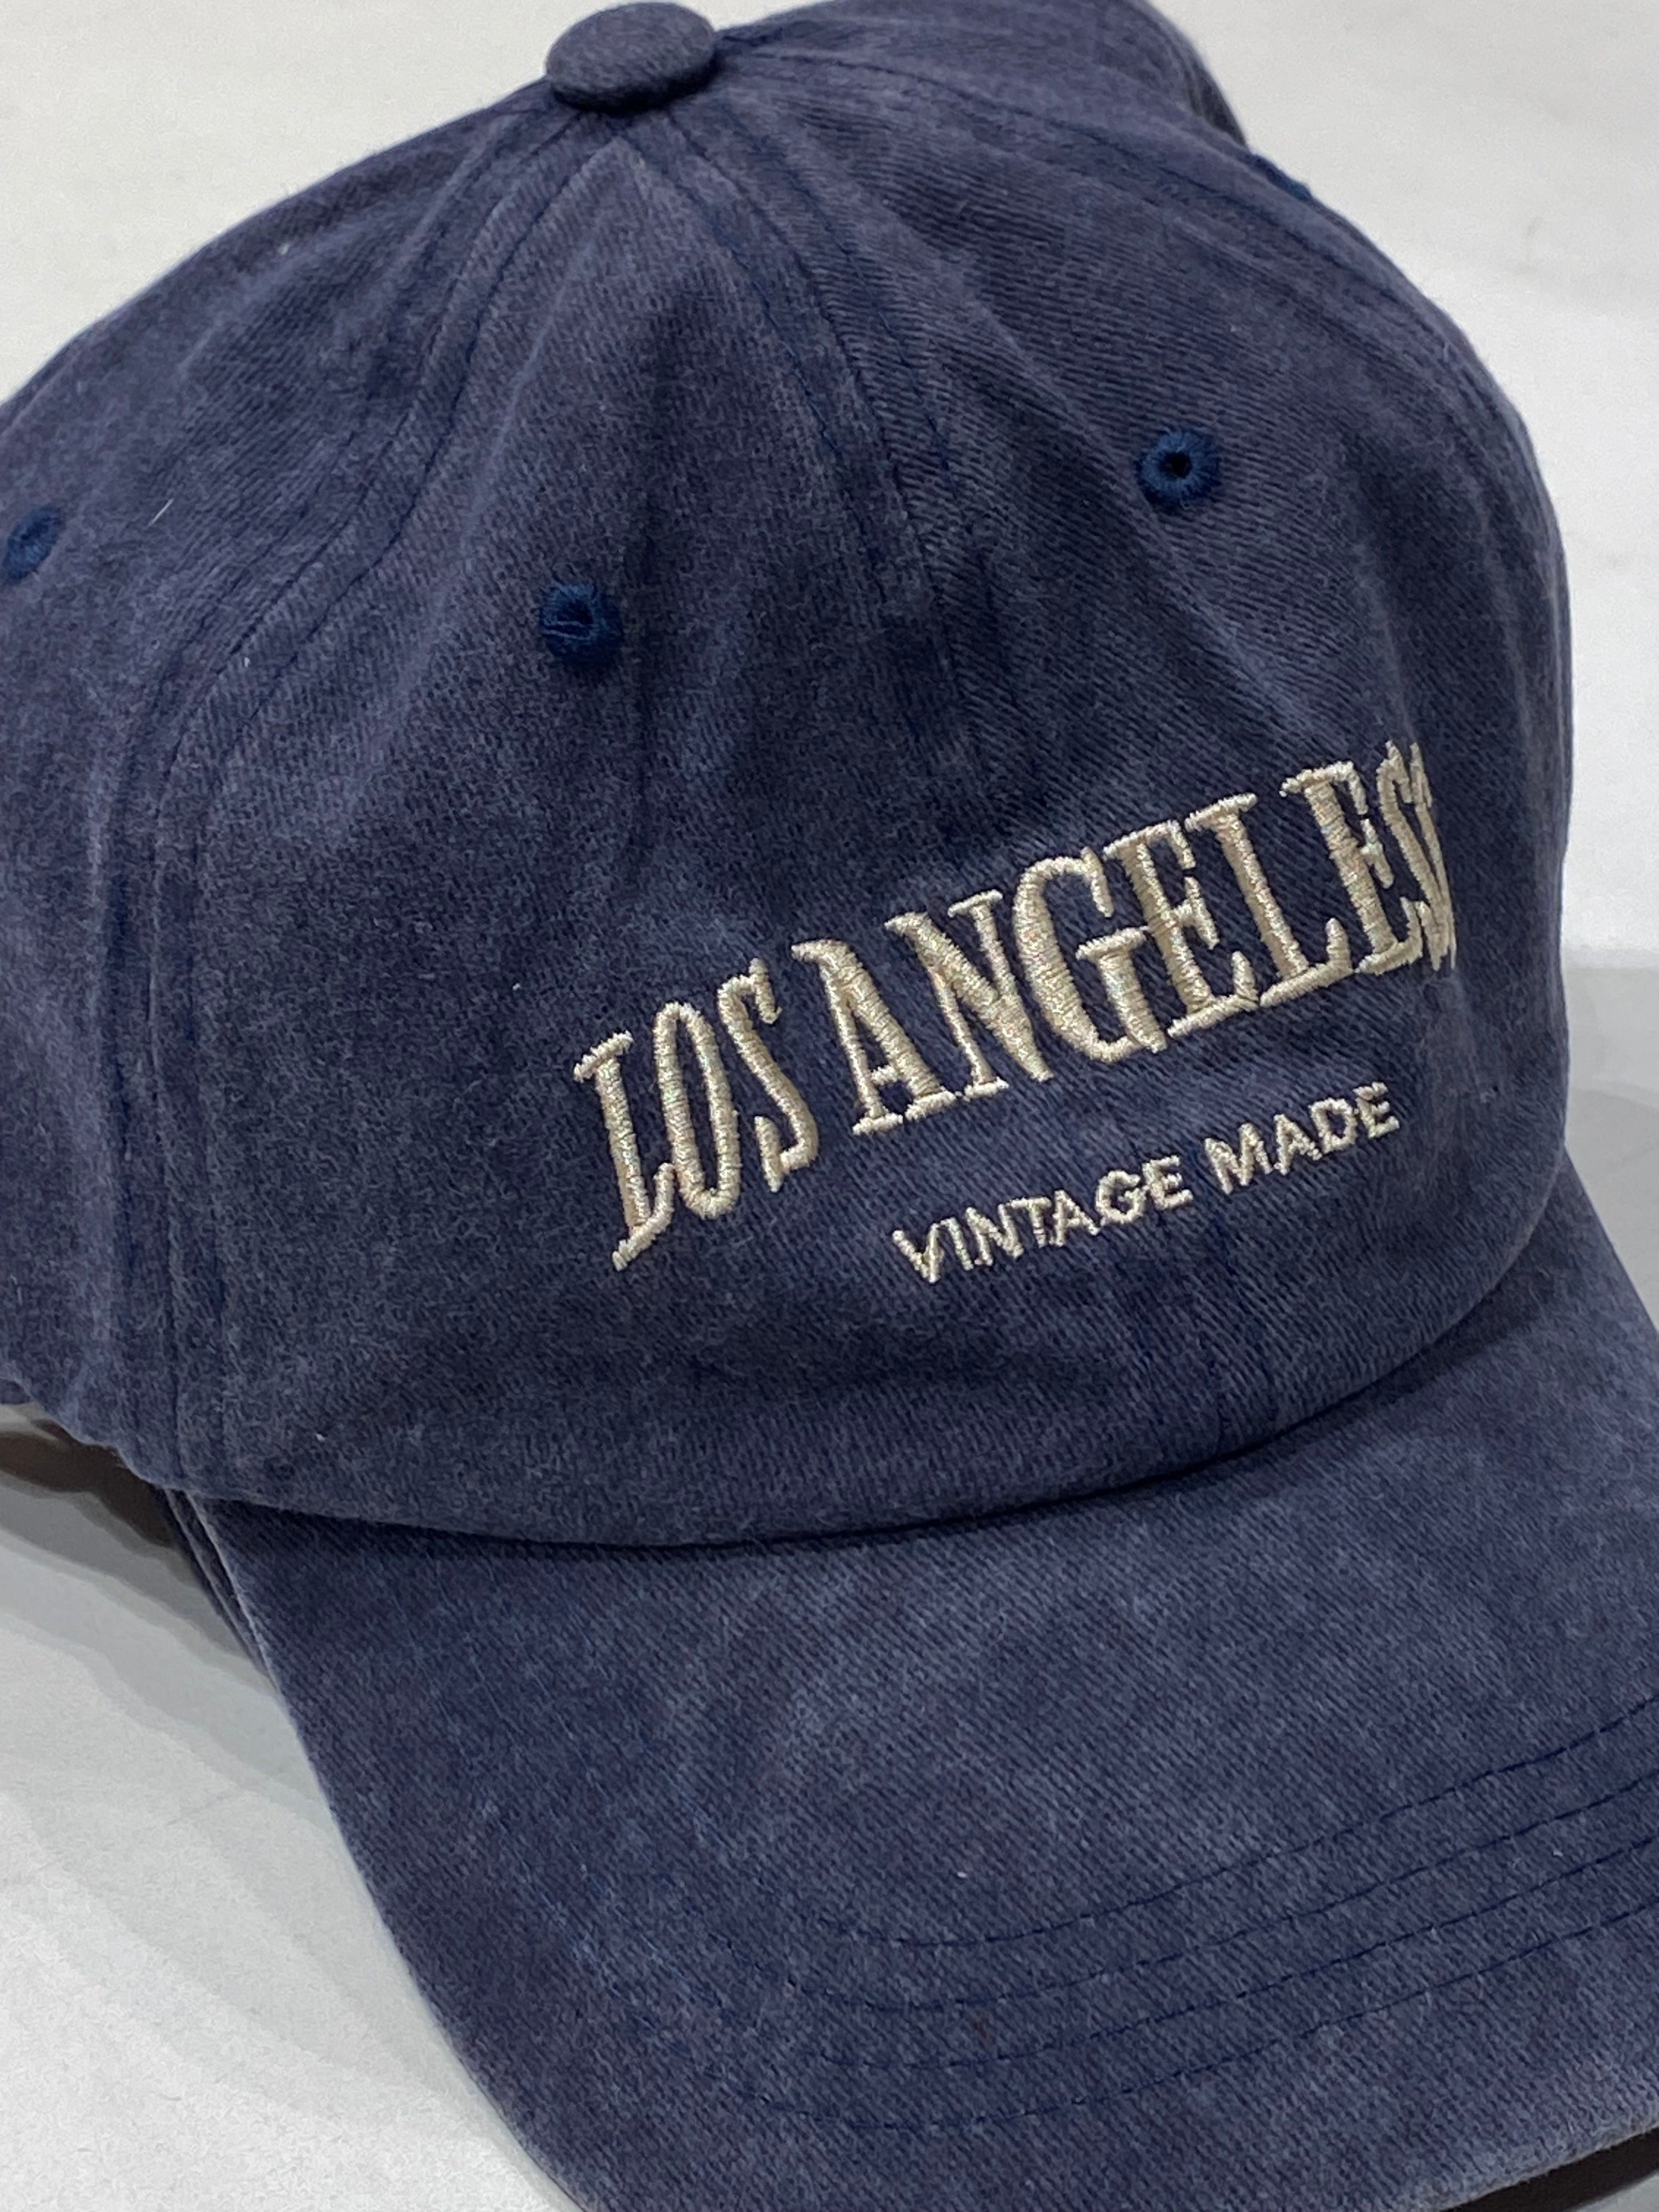 Los Angeles Hat - Navy Blue